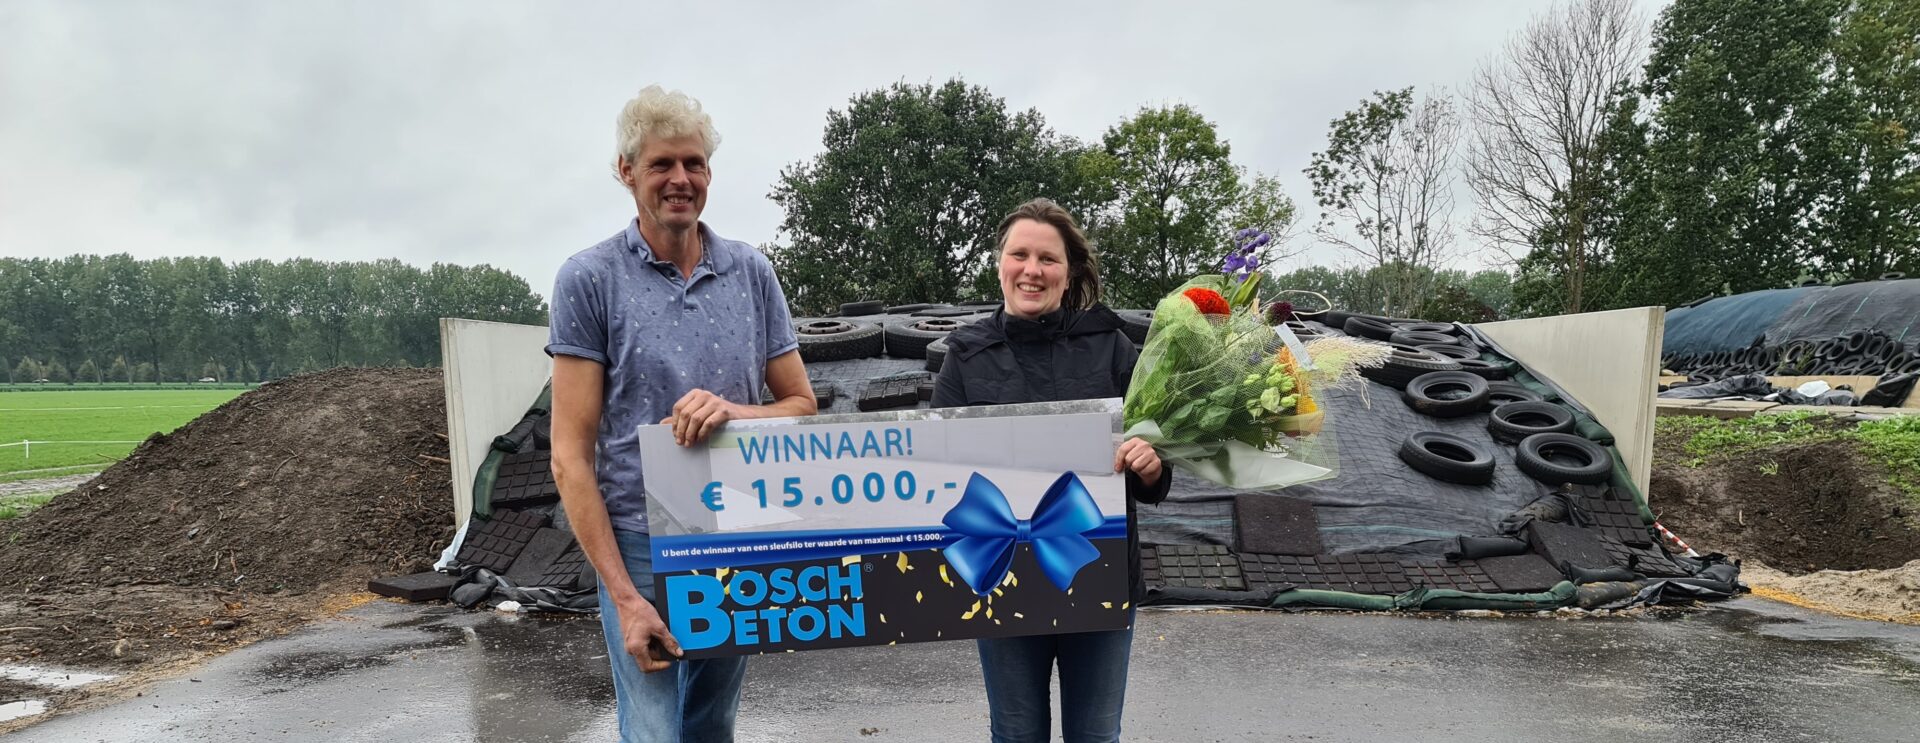 Bosch Beton - Sleufsilowinactie zomer 2020: winnaars in Nederland